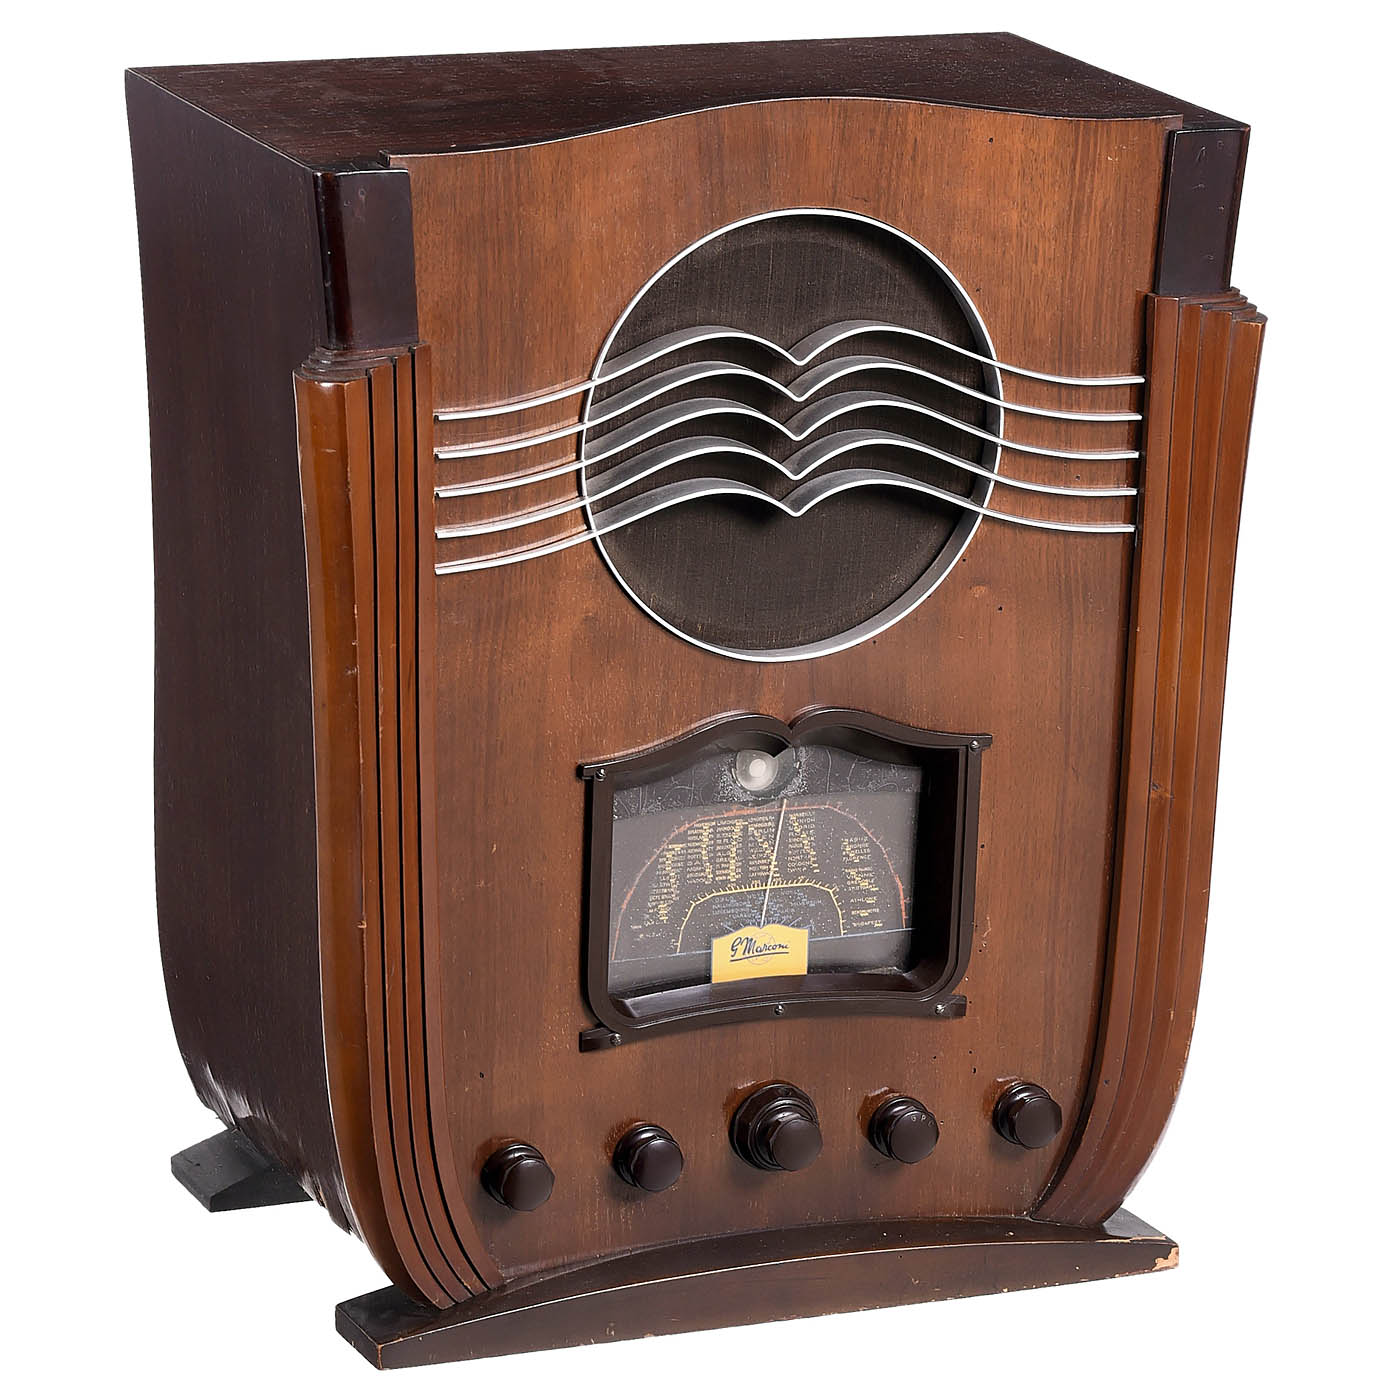 Marconi Model 36 Radio, c. 1936